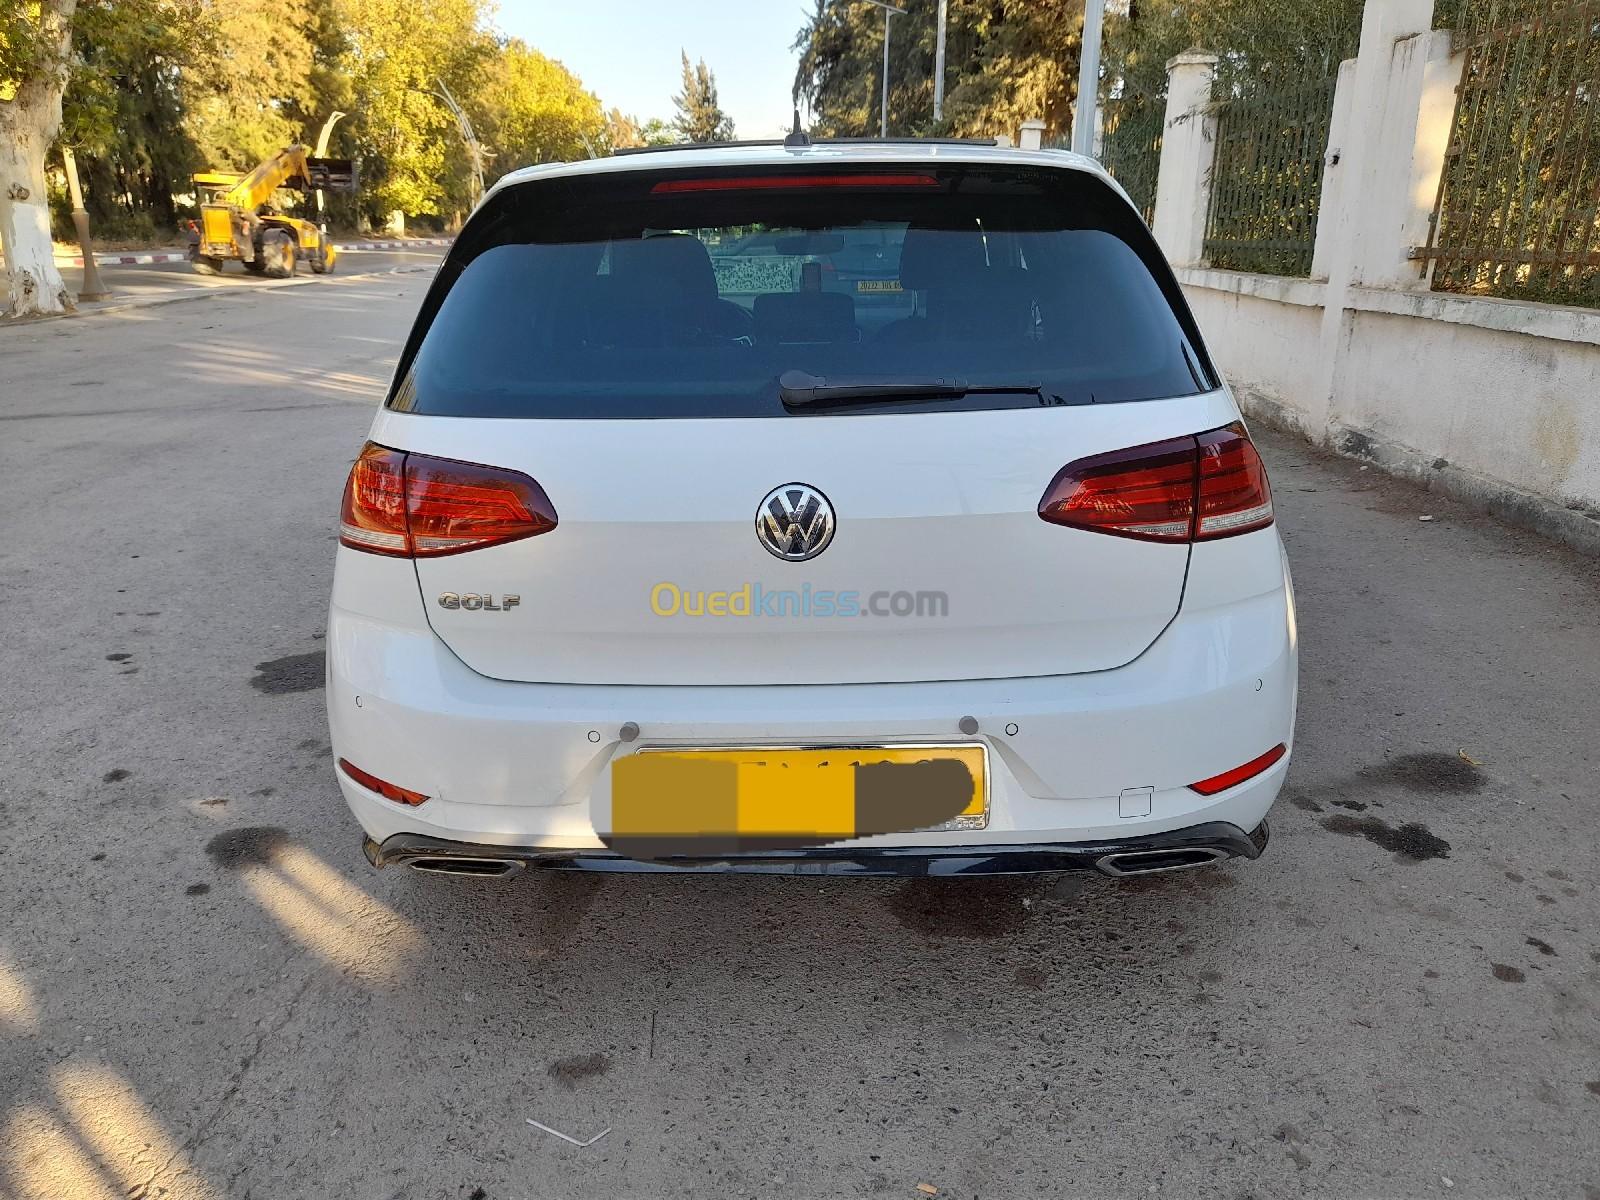 Volkswagen Golf 7 2018 R-Line - Blida Algeria